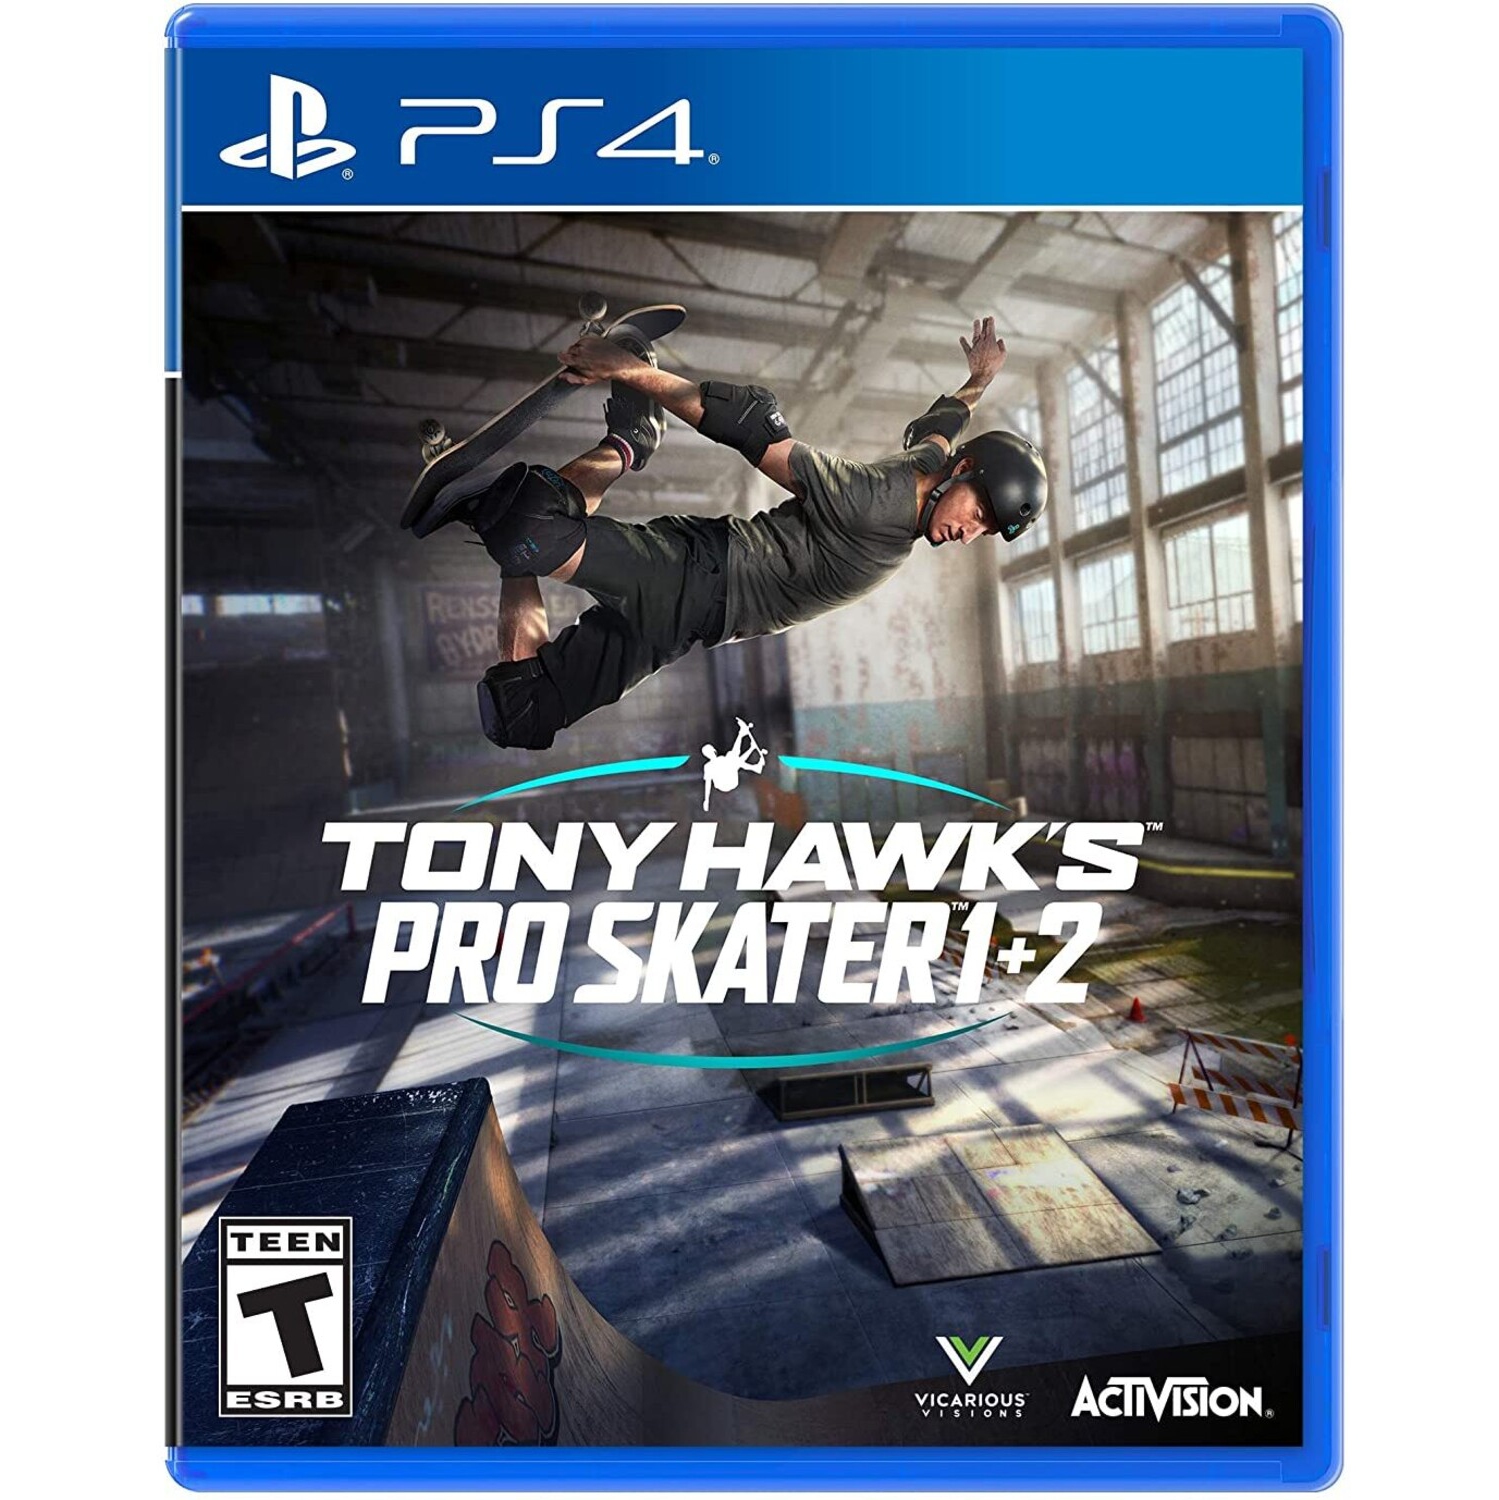 Tony Hawk Pro Skater 1 + 2 for PlayStation 4 [VIDEOGAMES]